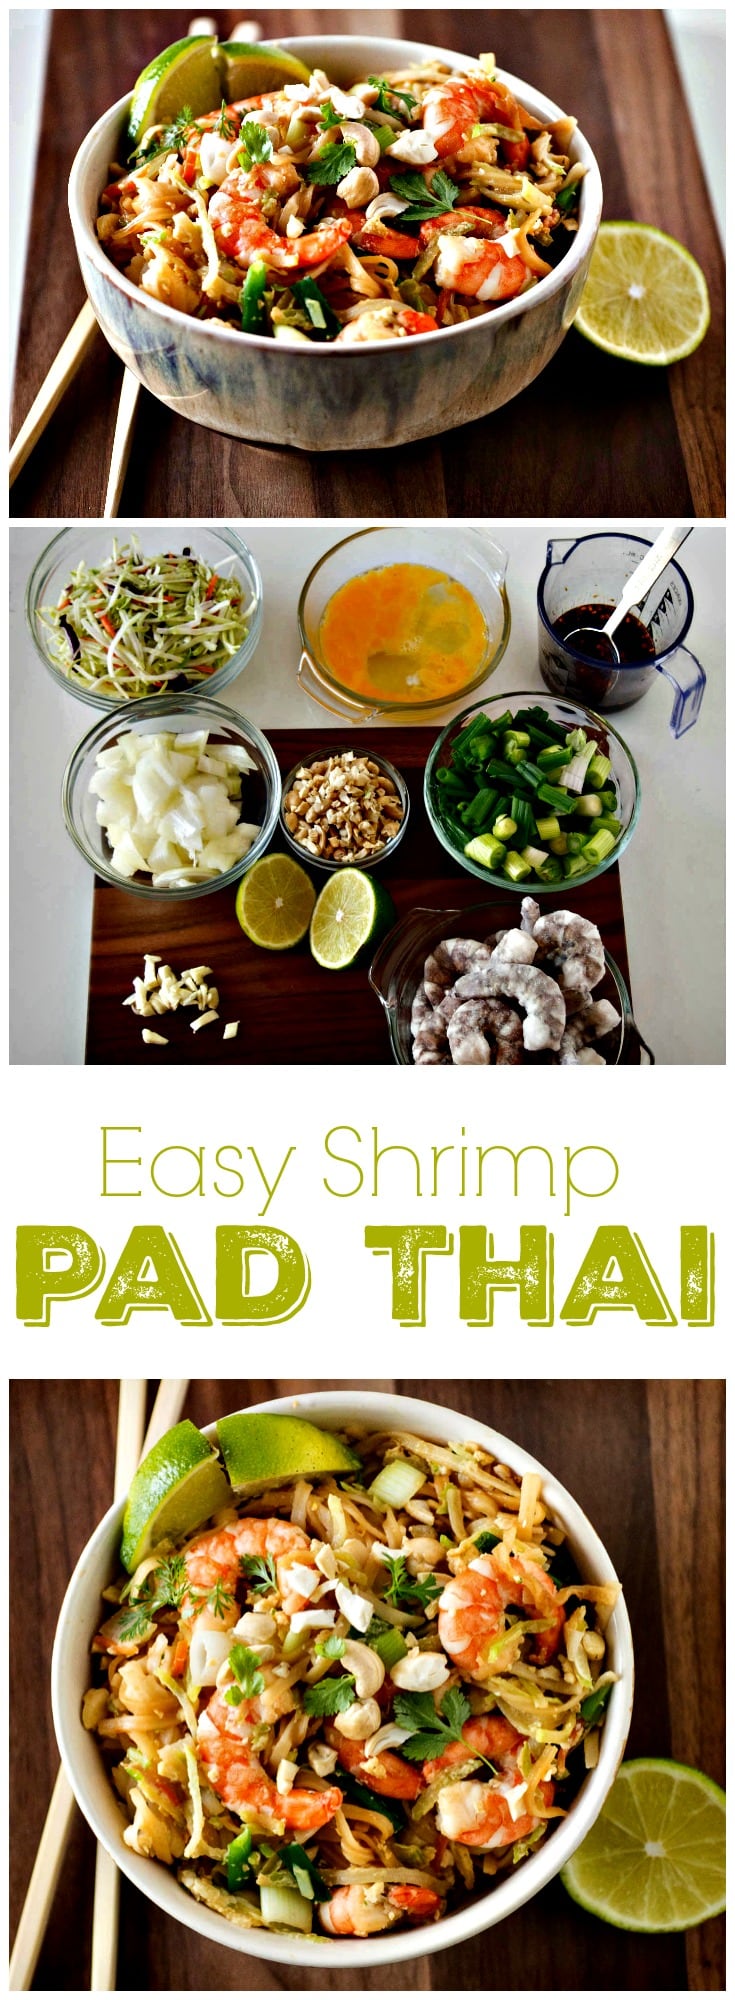 Easy shrimp pad thai.